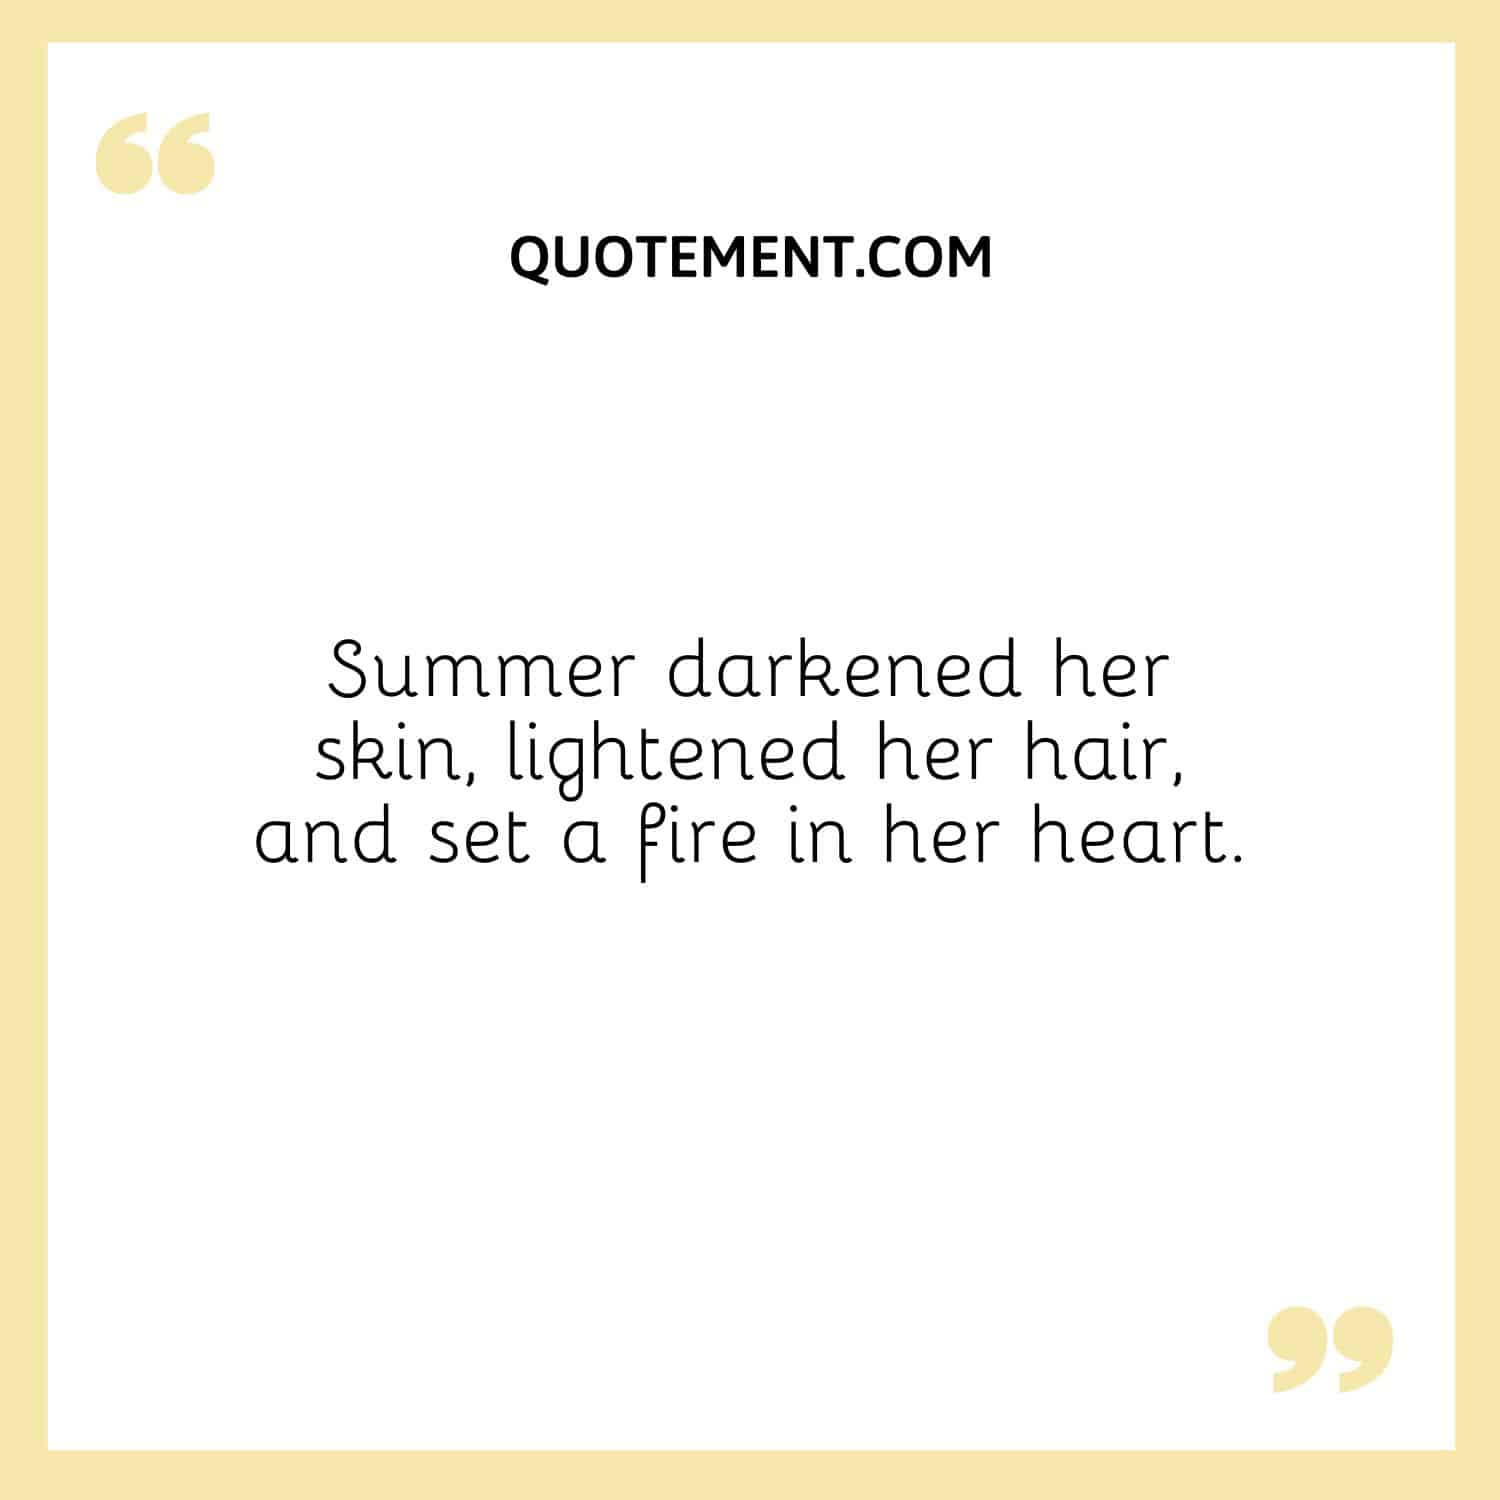 Summer darkened her skin, lightened her hair, and set a fire in her heart.